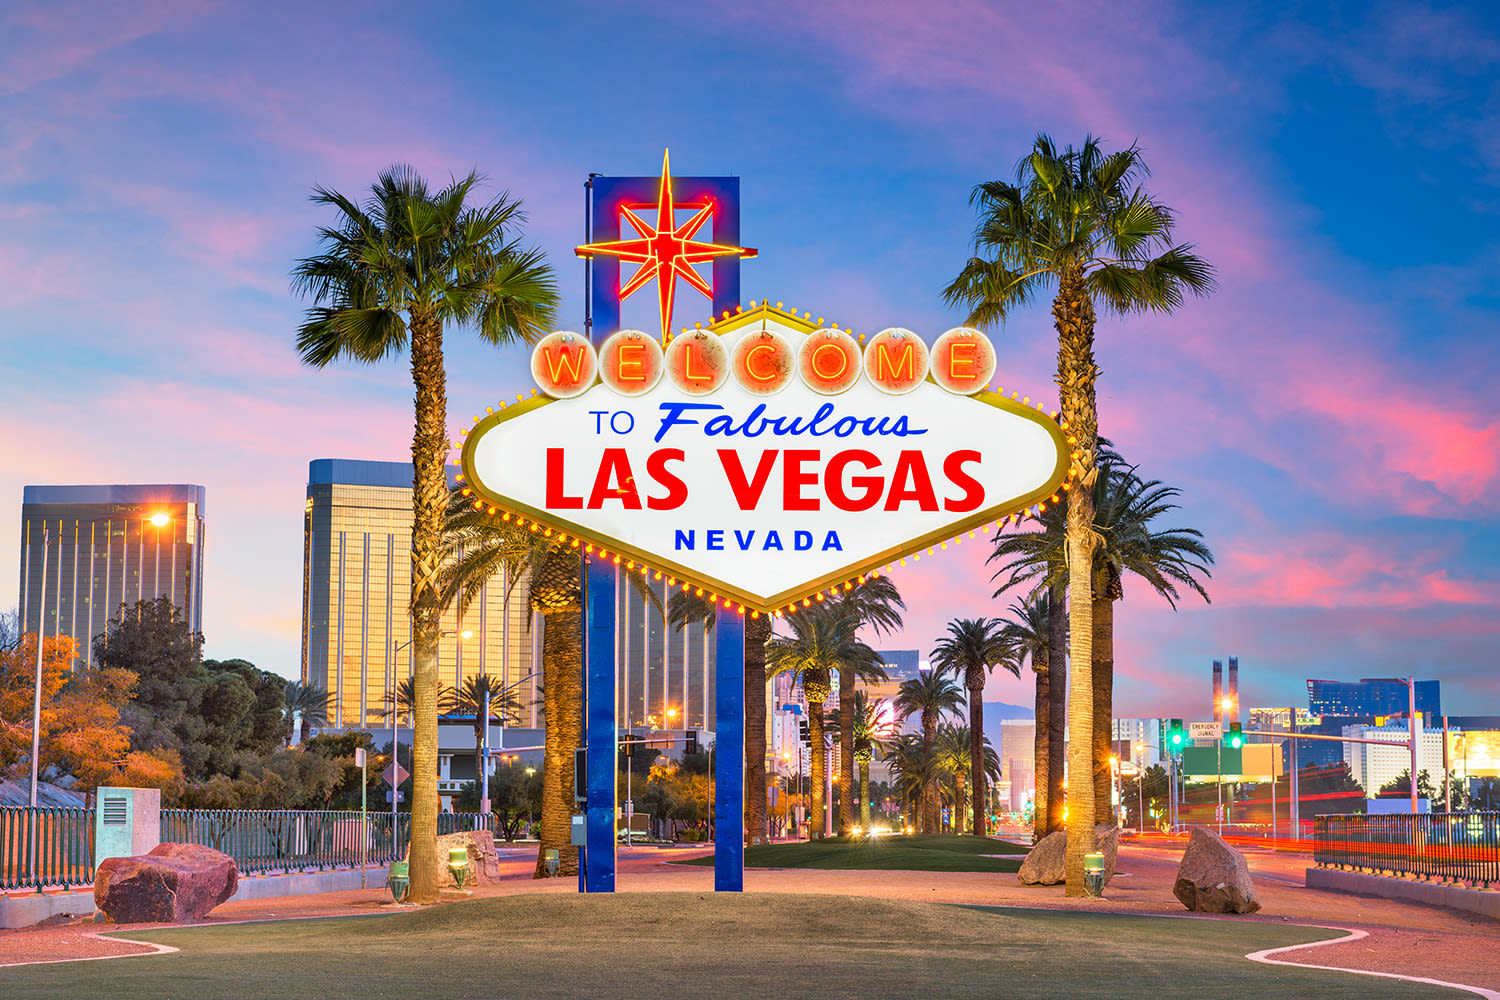 Billboard reading 'to fabulous Las Vegas, Nevada' signifying area code 702